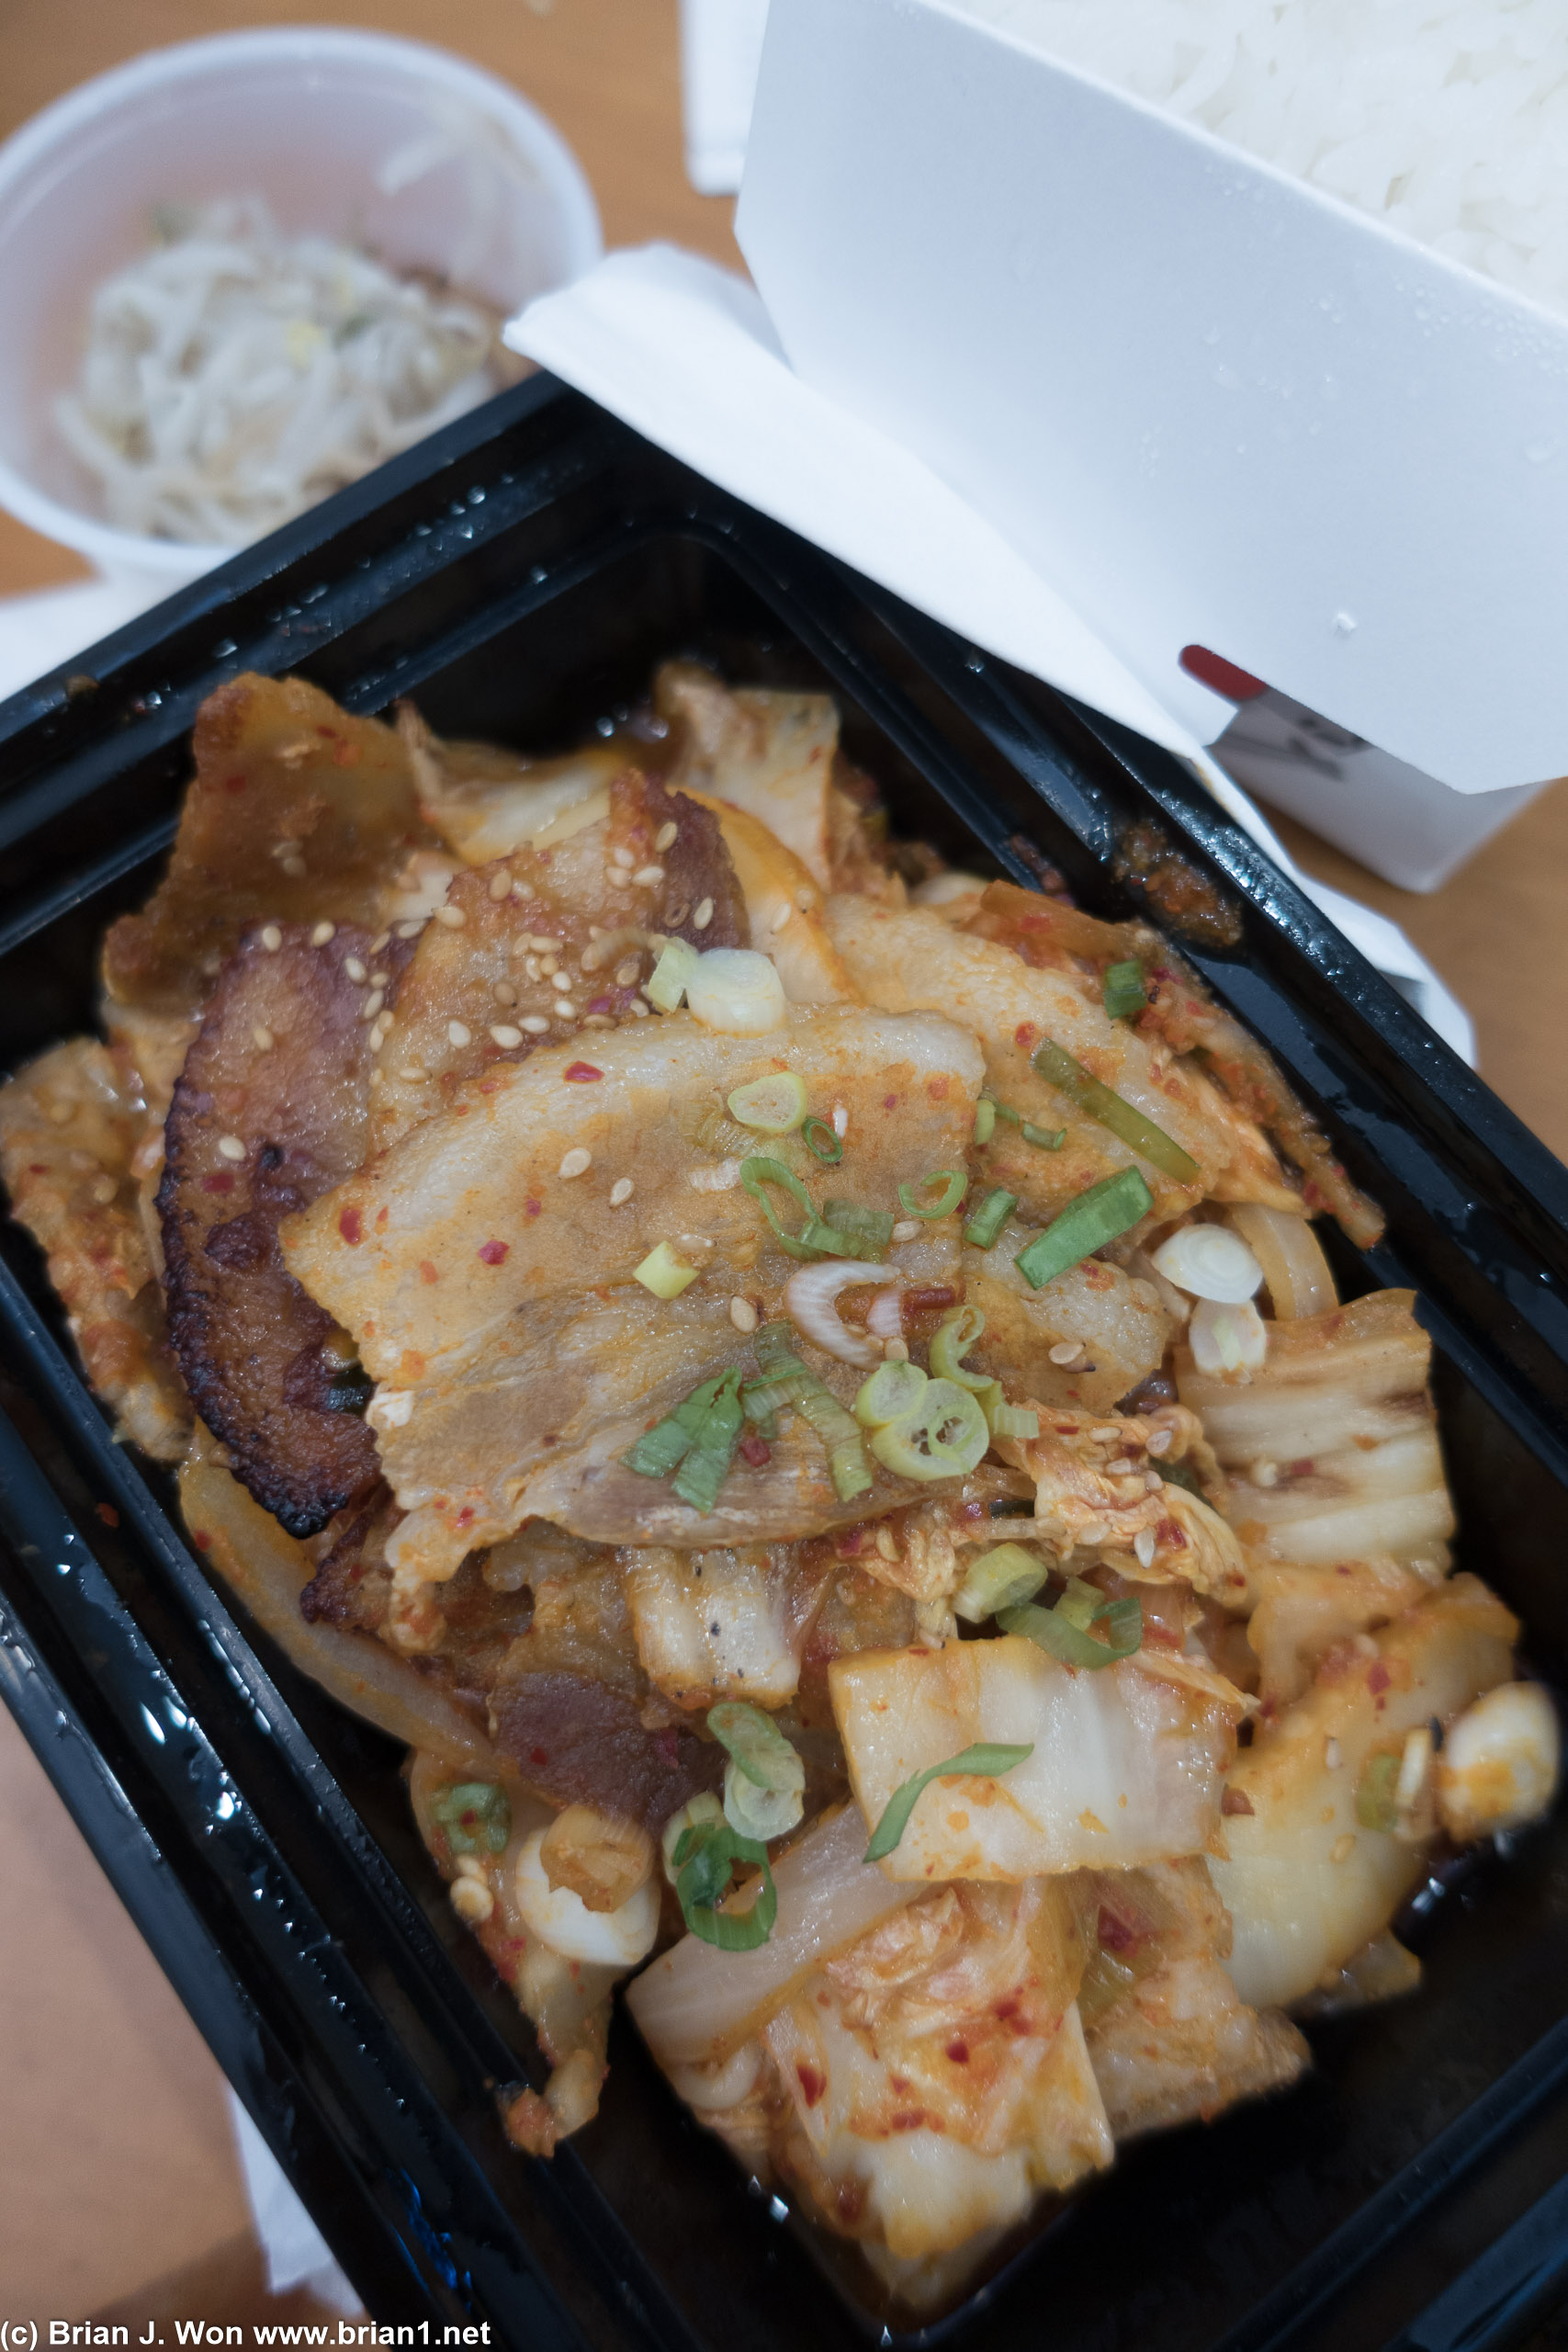 Pork belly kimchi plate from Gushi. Nom!